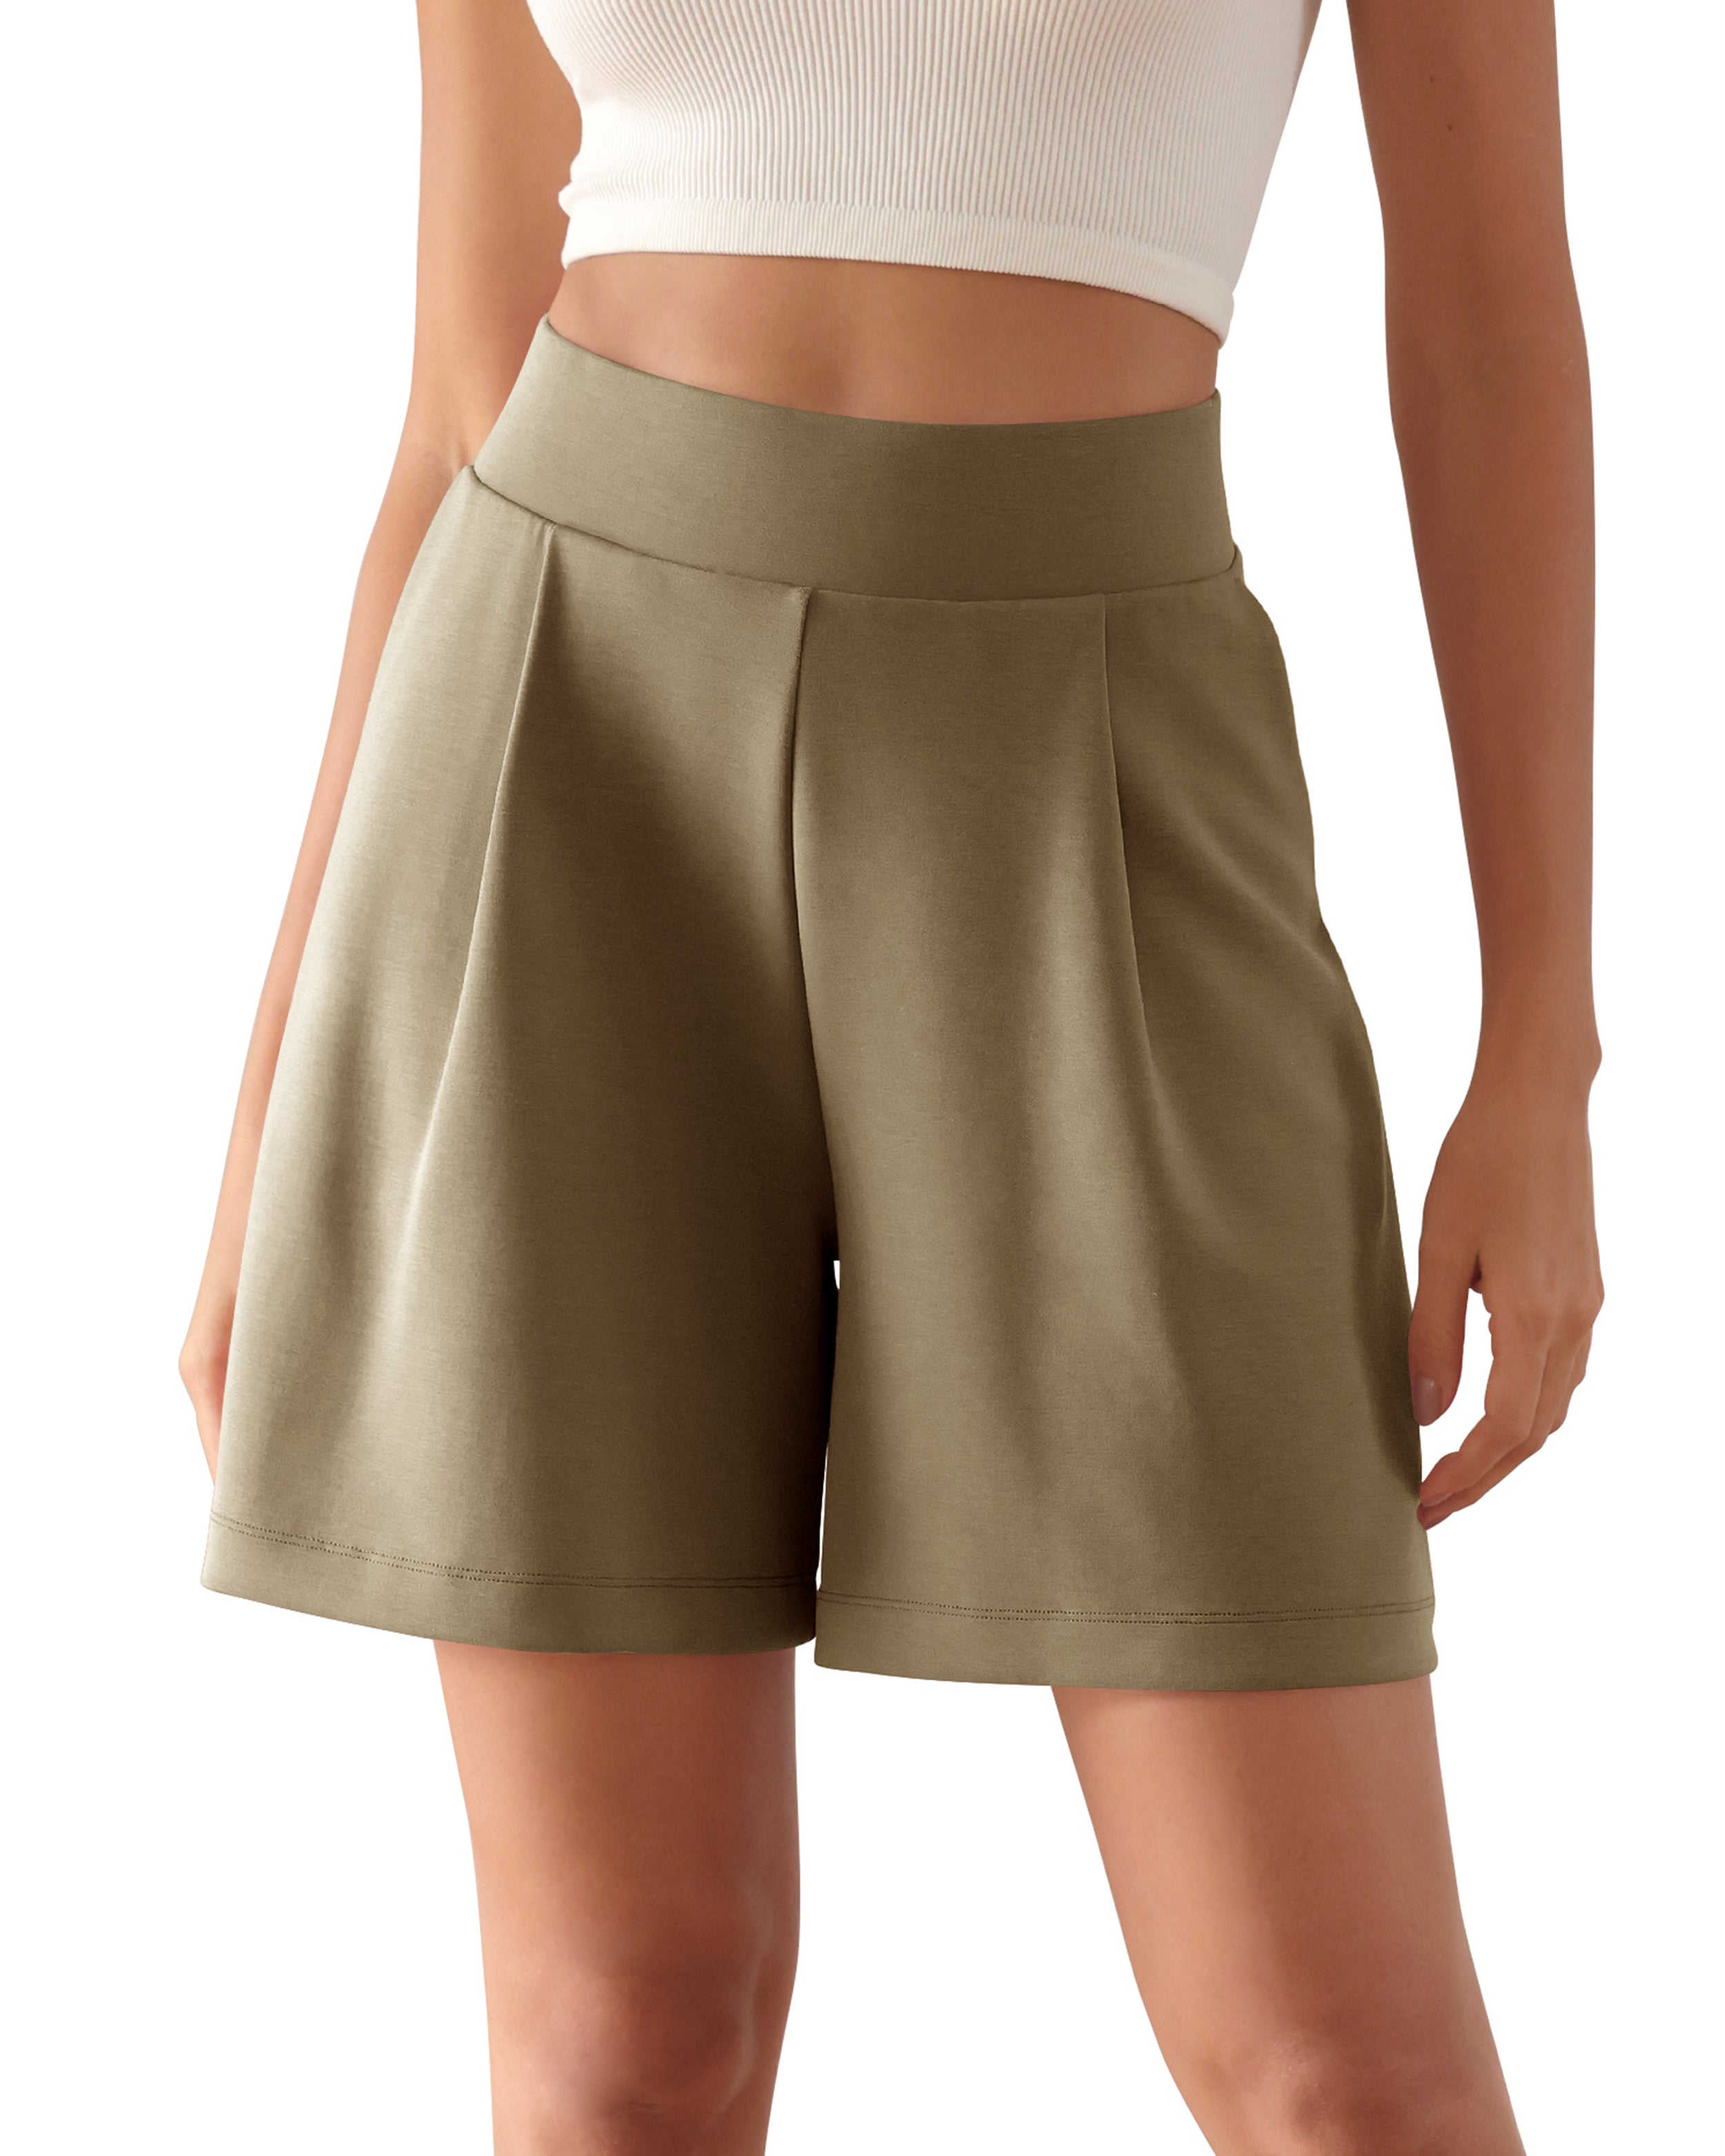 Modal Soft High Waist Wide Leg Shorts with Pockets Espresso 6 inch - ododos